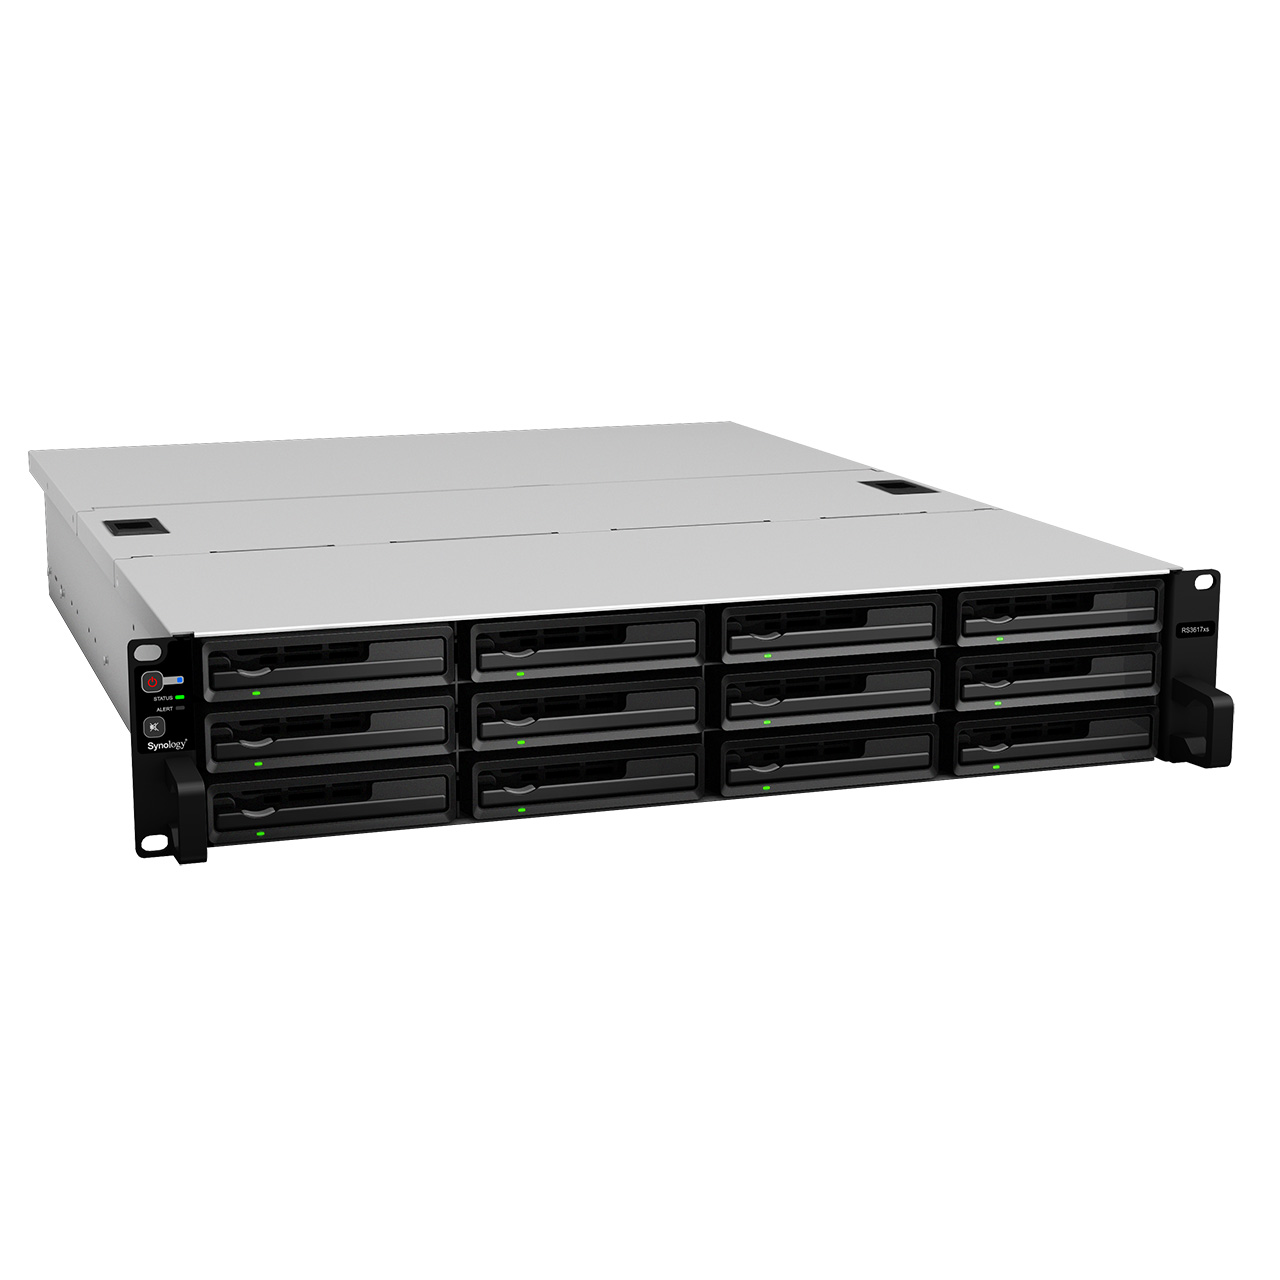 RS3617xs 36TB Synology - Storage NAS 12 Baias Rackstation SATA